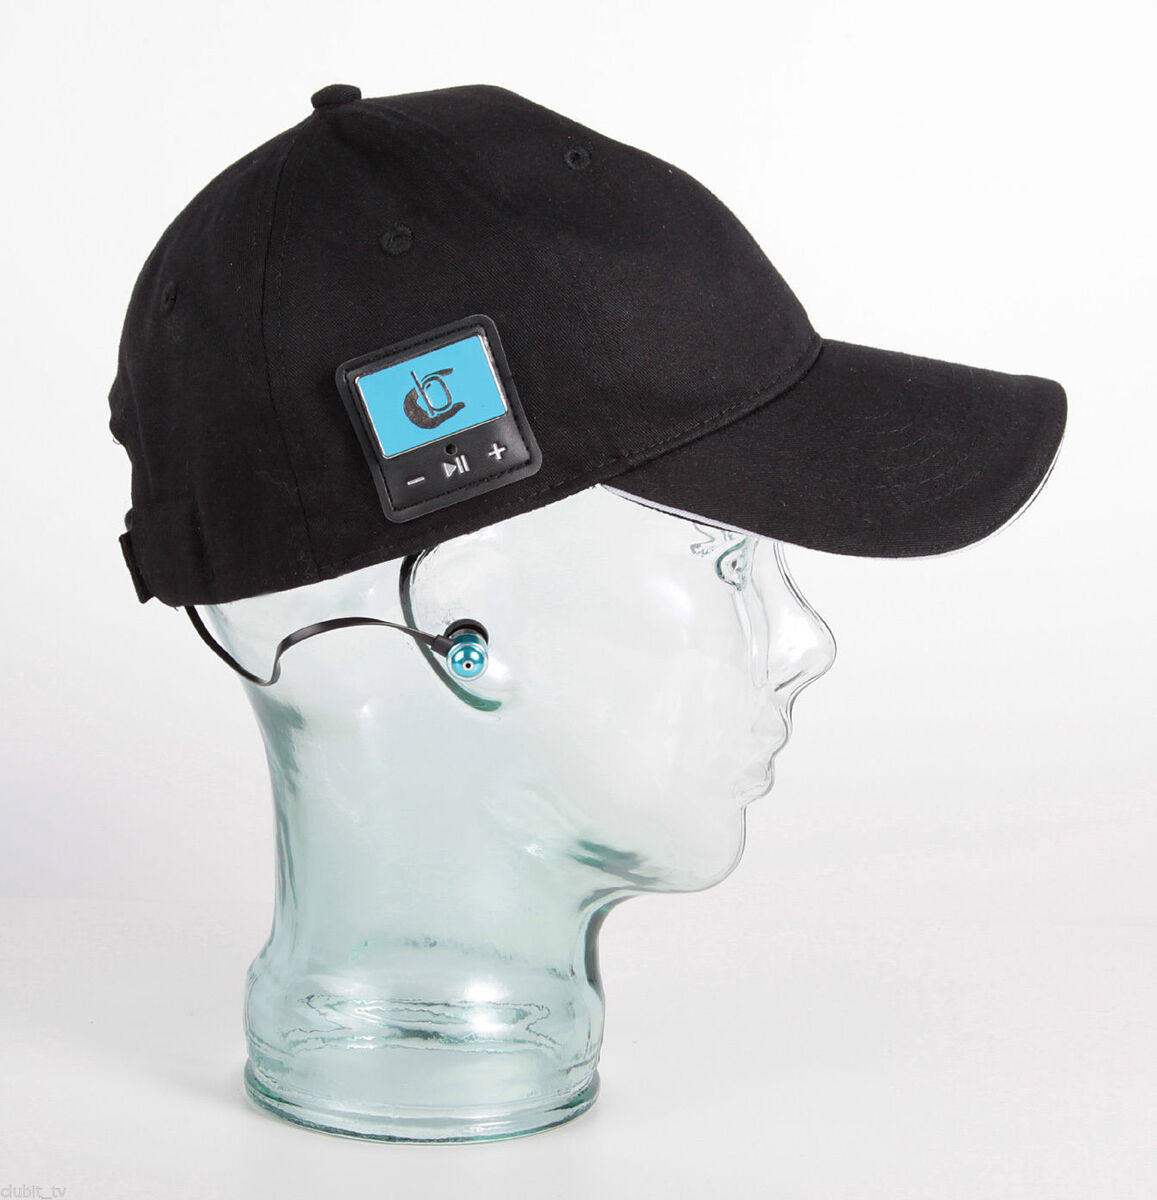 Bluetooth Baseball Cap Hat Hands Free Music Earphones Black NEW